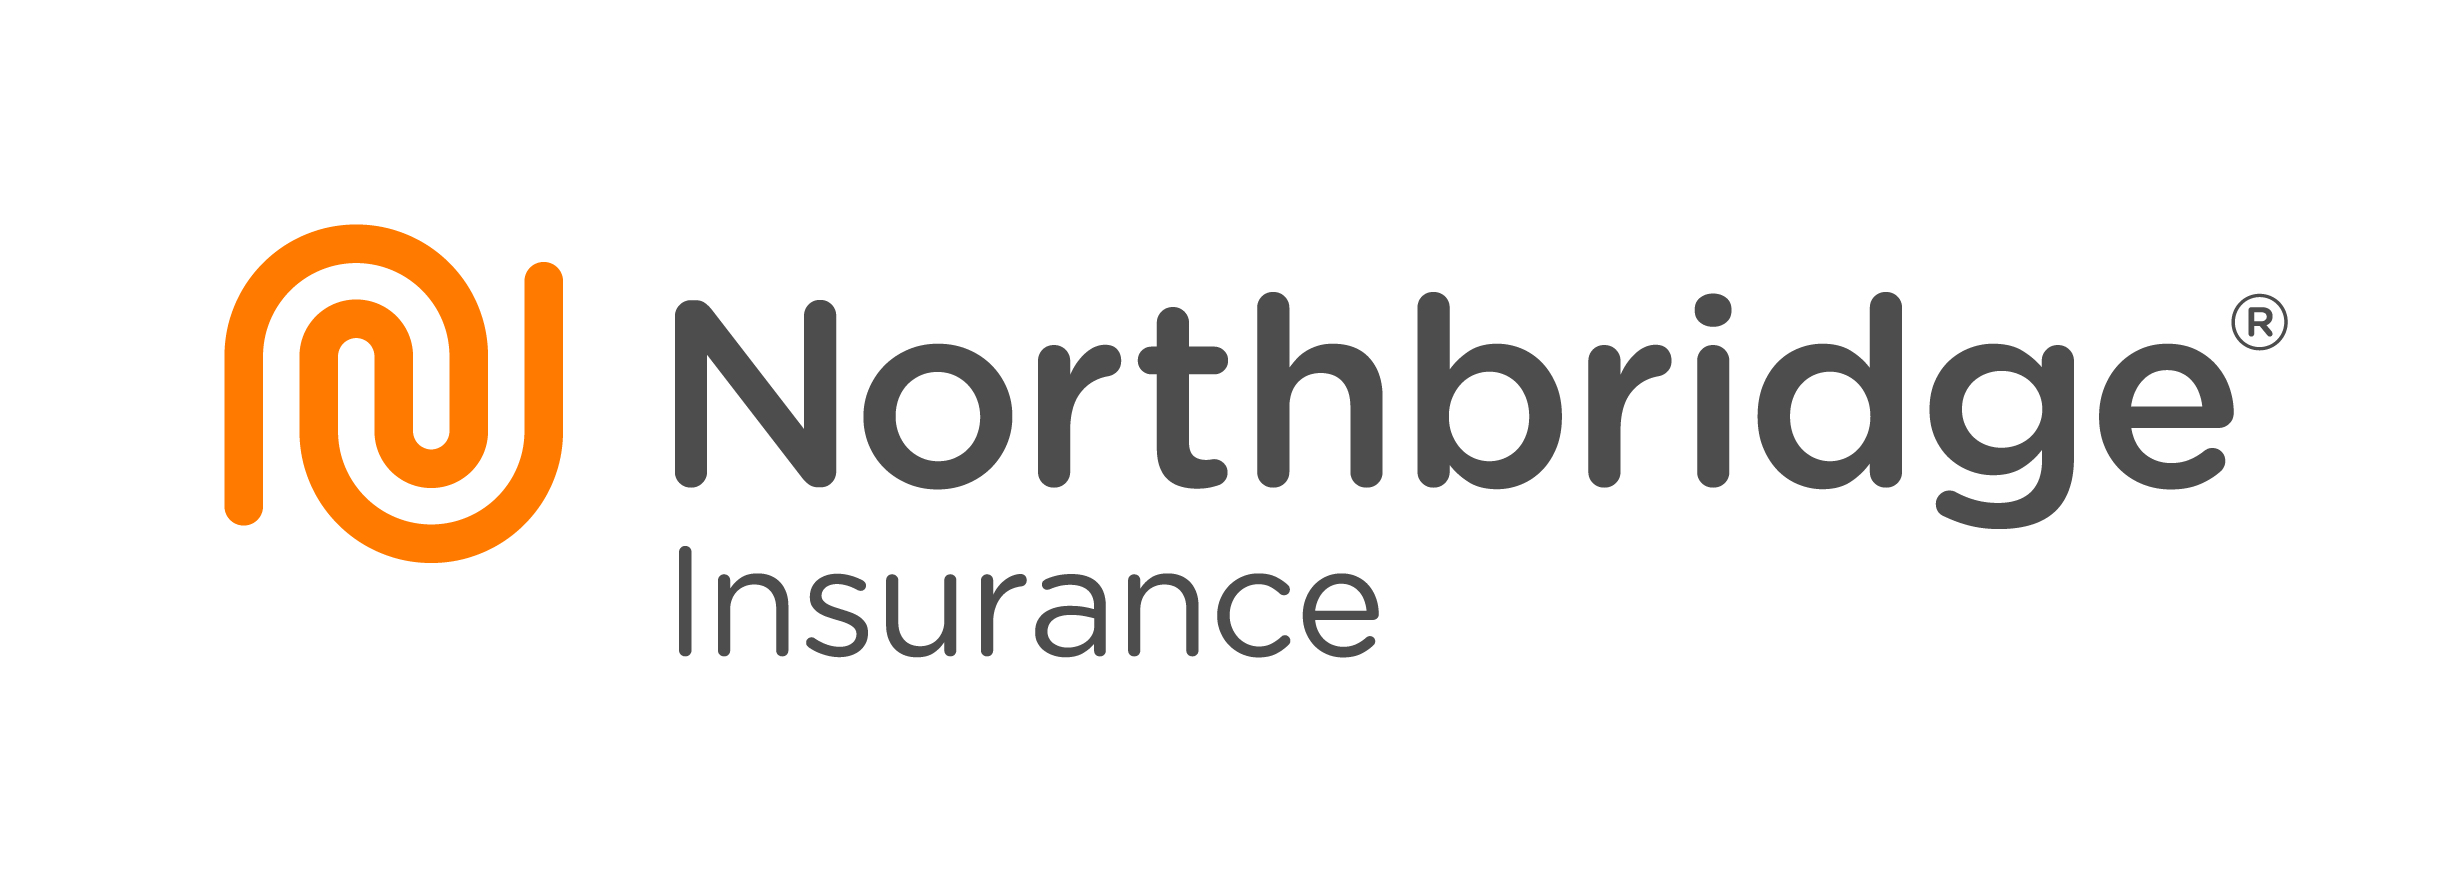 Nothbridge Insurance Corporation